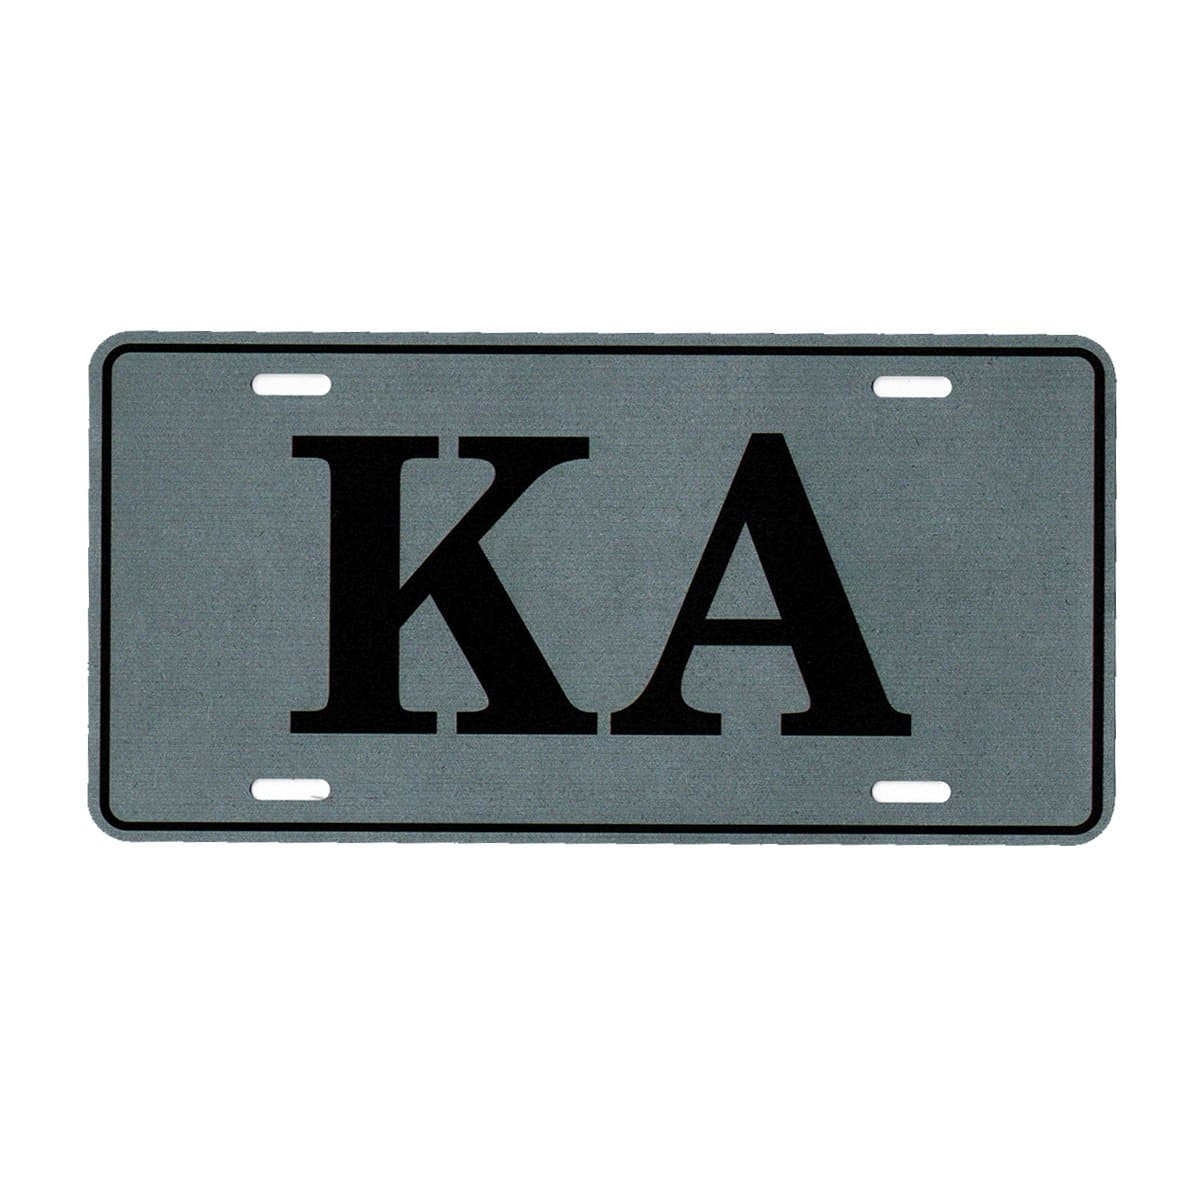 Kappa Alpha License Plate | Kappa Alpha Order | Car accessories > Decorative license plates